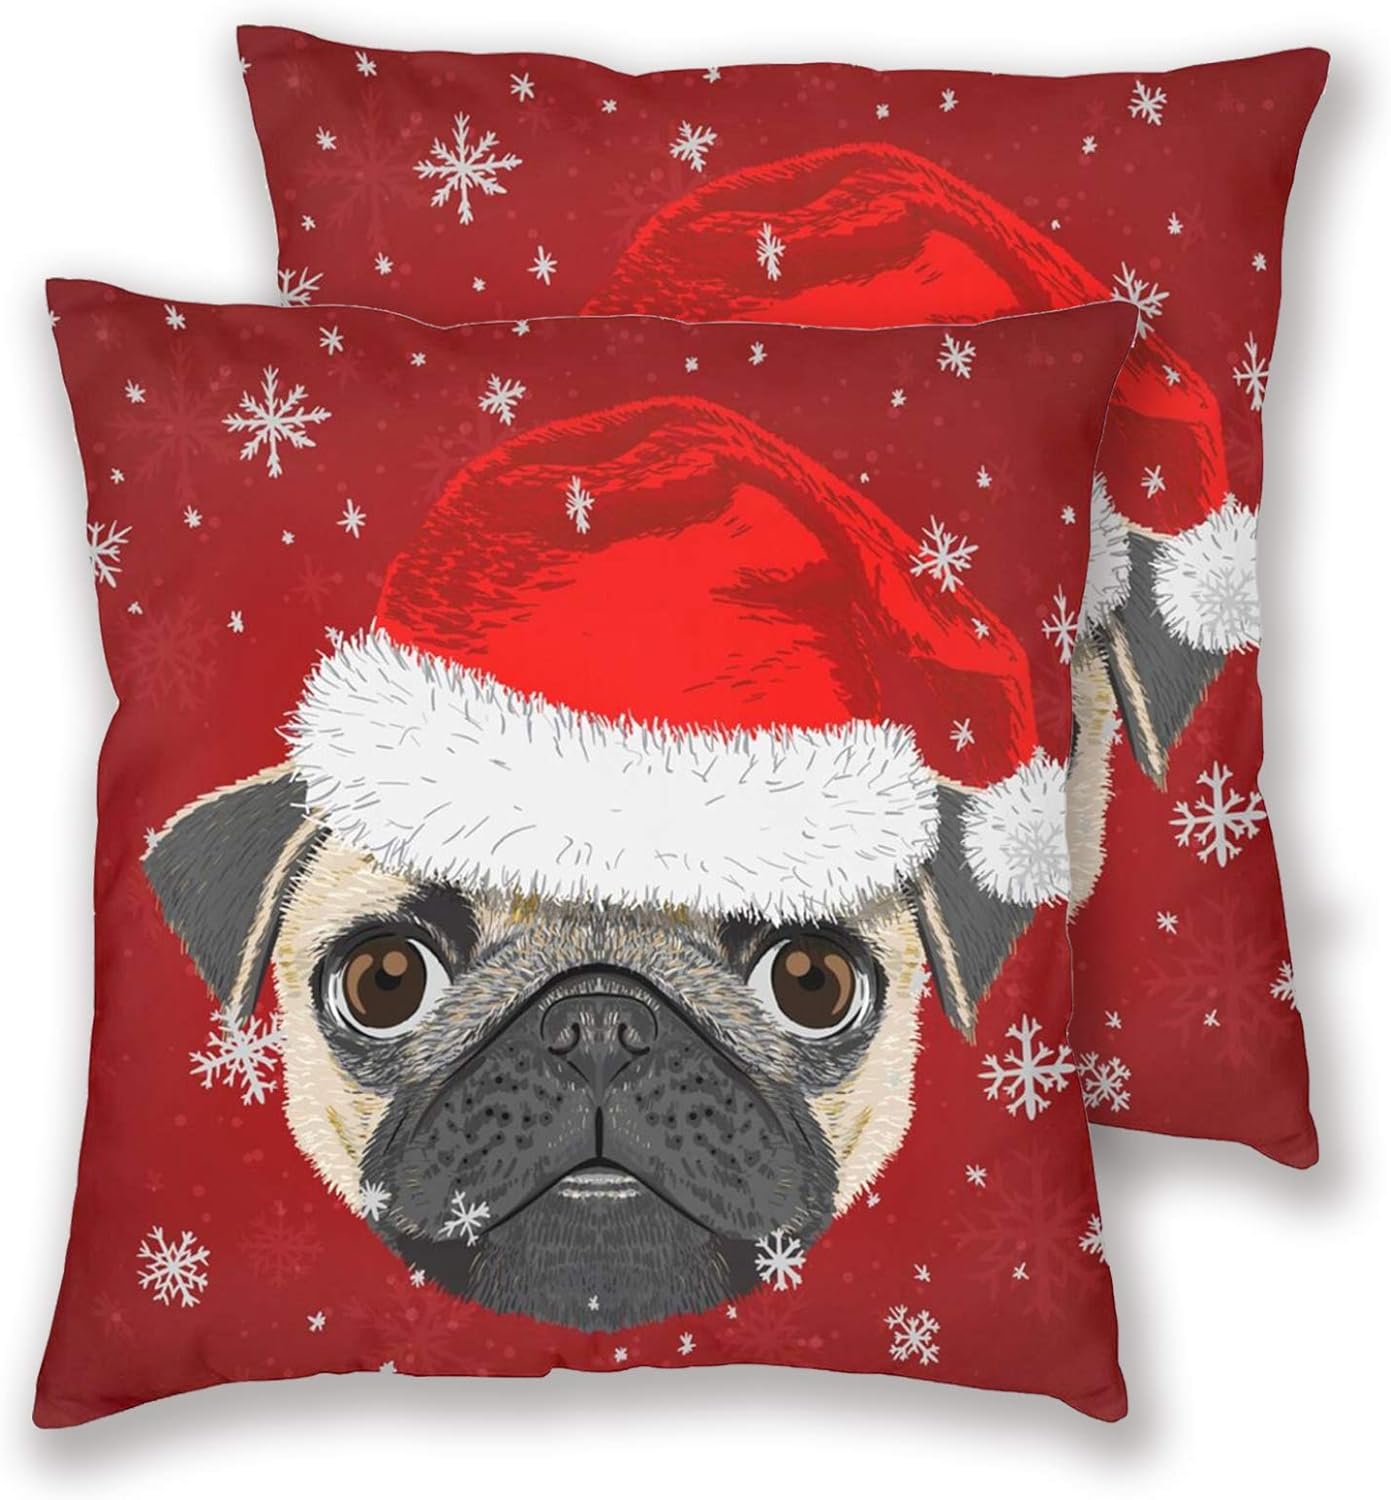 Merry Christmas Decorative Square Pug Pillowcases